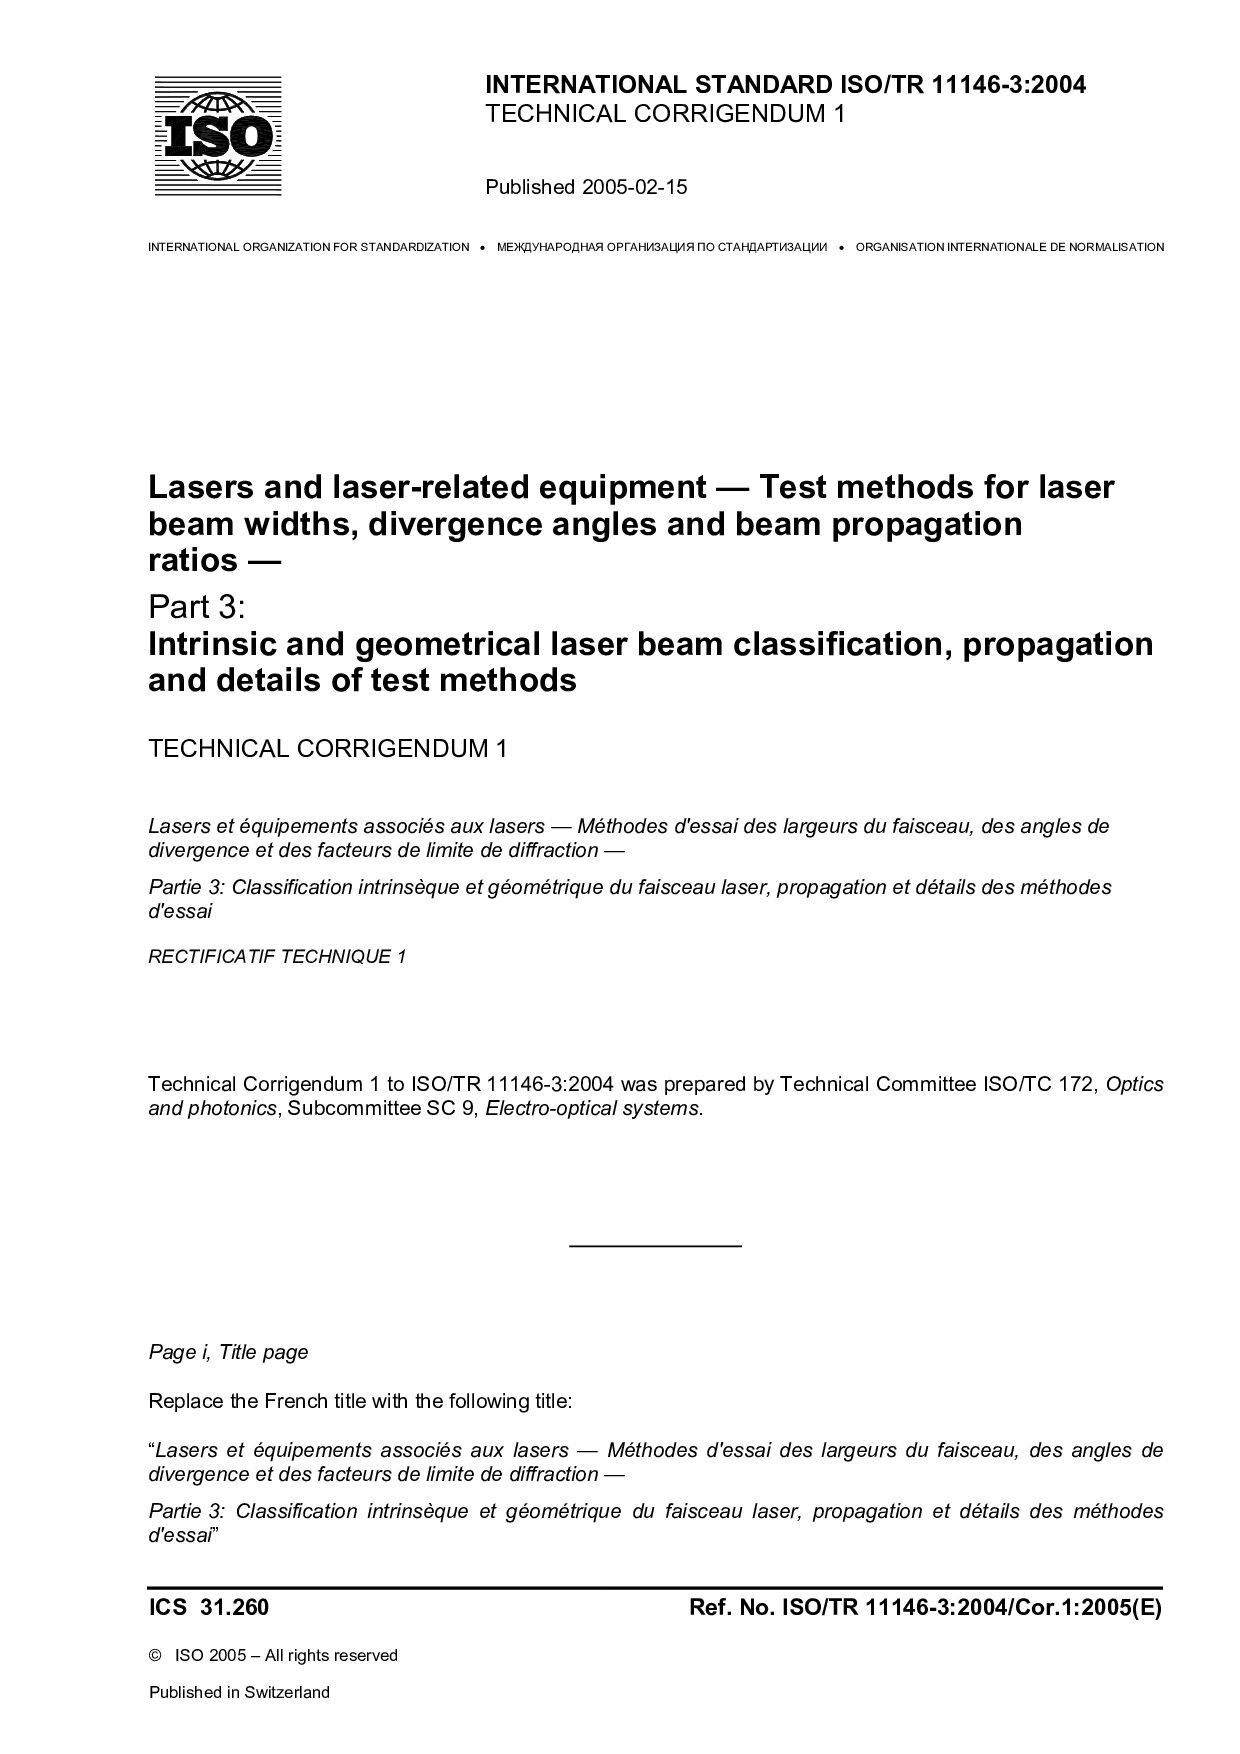 ISO/TR 11146-3 Technical Corrigendum 1-2005